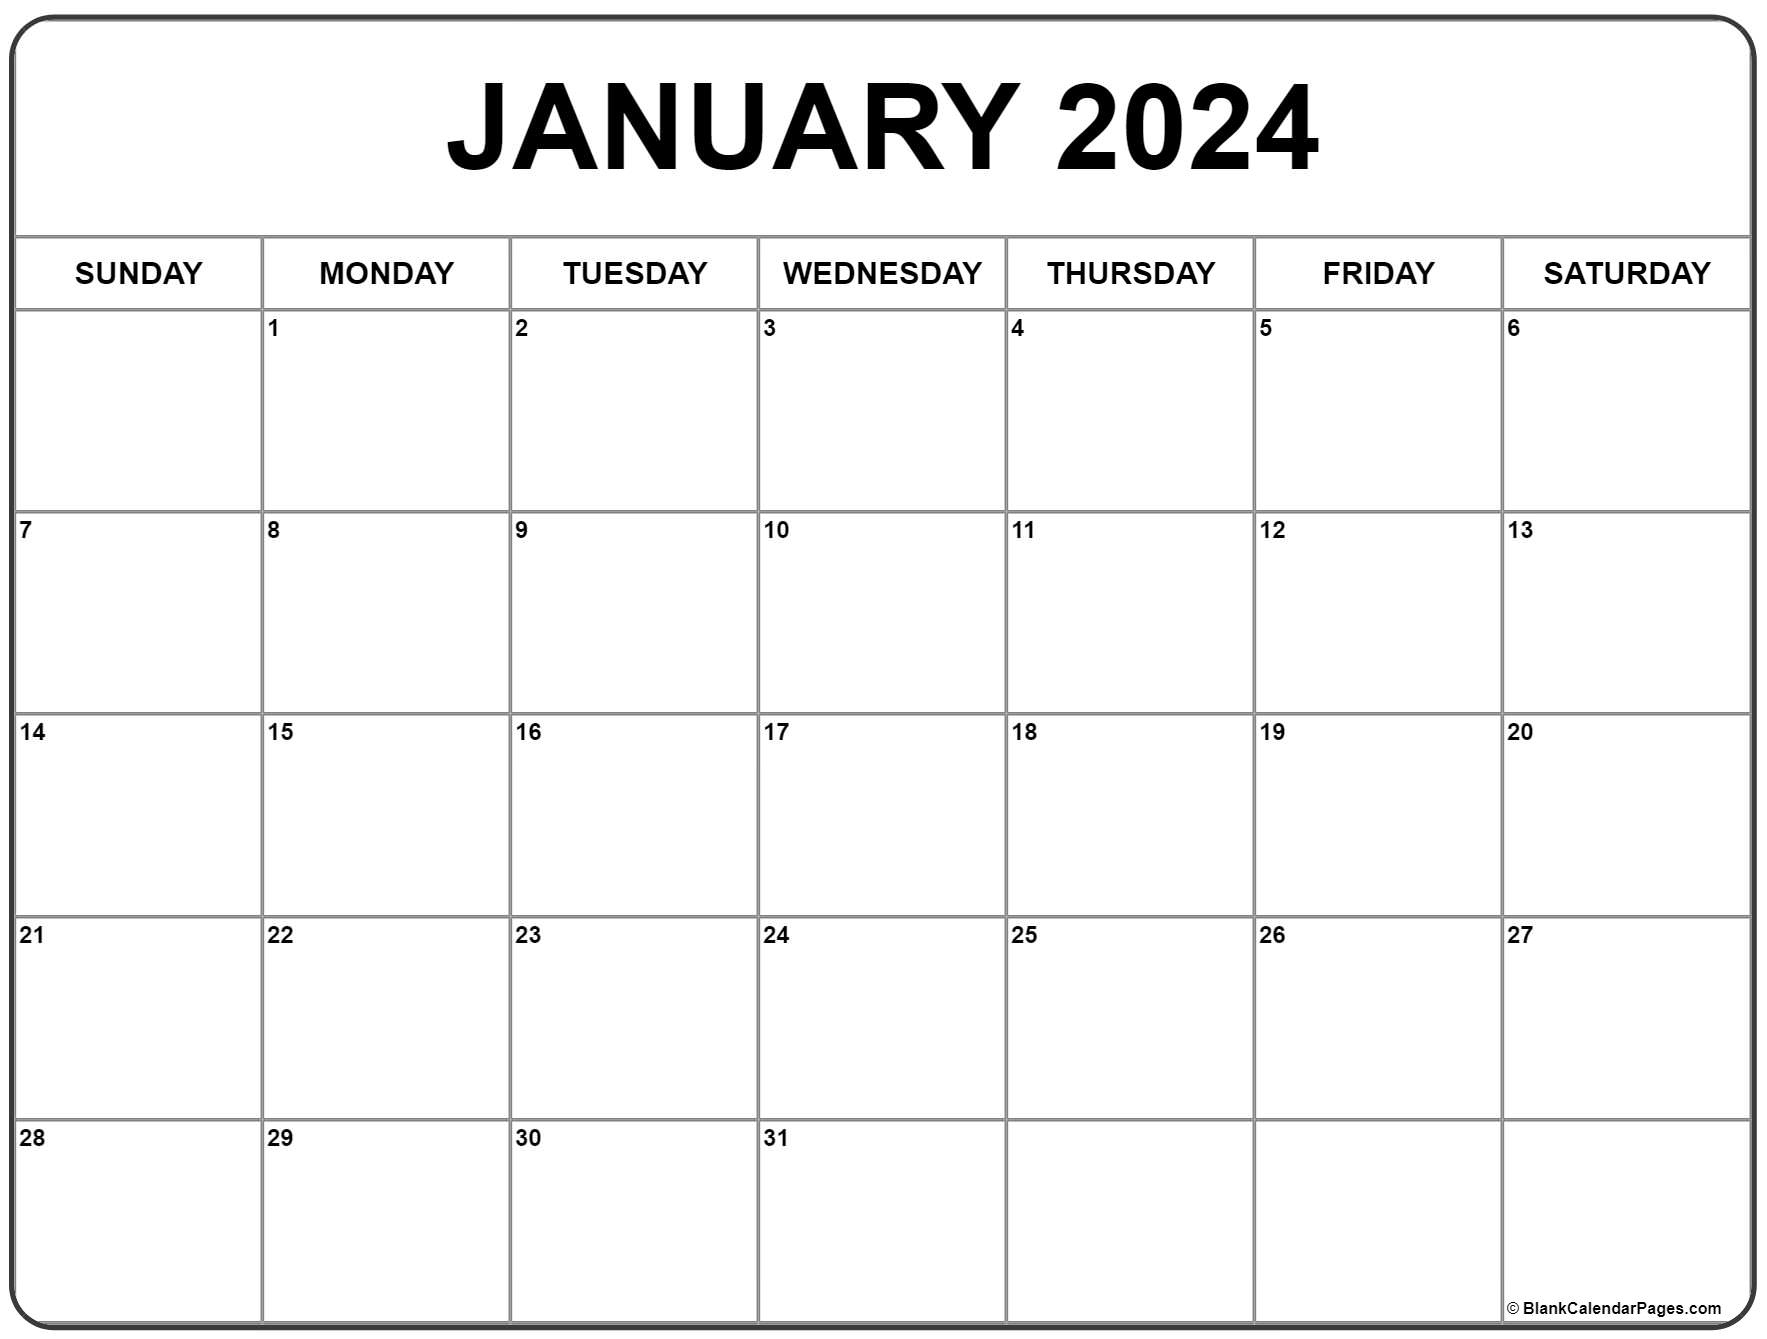 January 2024 Calendar | Free Printable Calendar | Printable Calendar 2024 Free Monthly